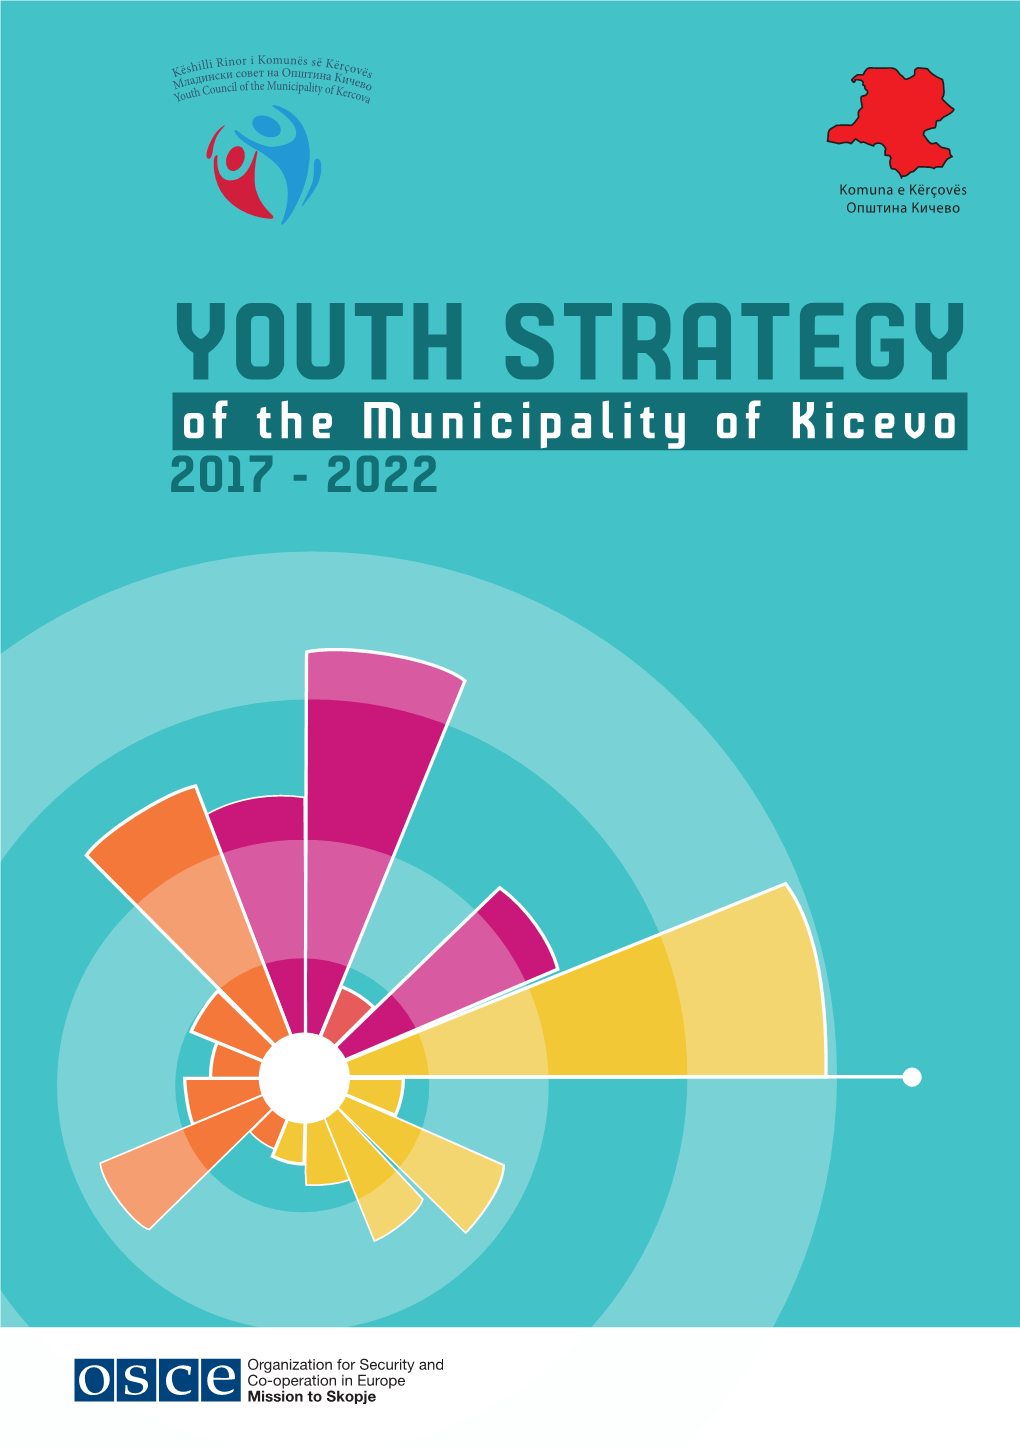 YOUTH STRATEGY of the Municipality of Kicevo 2017 - 2022